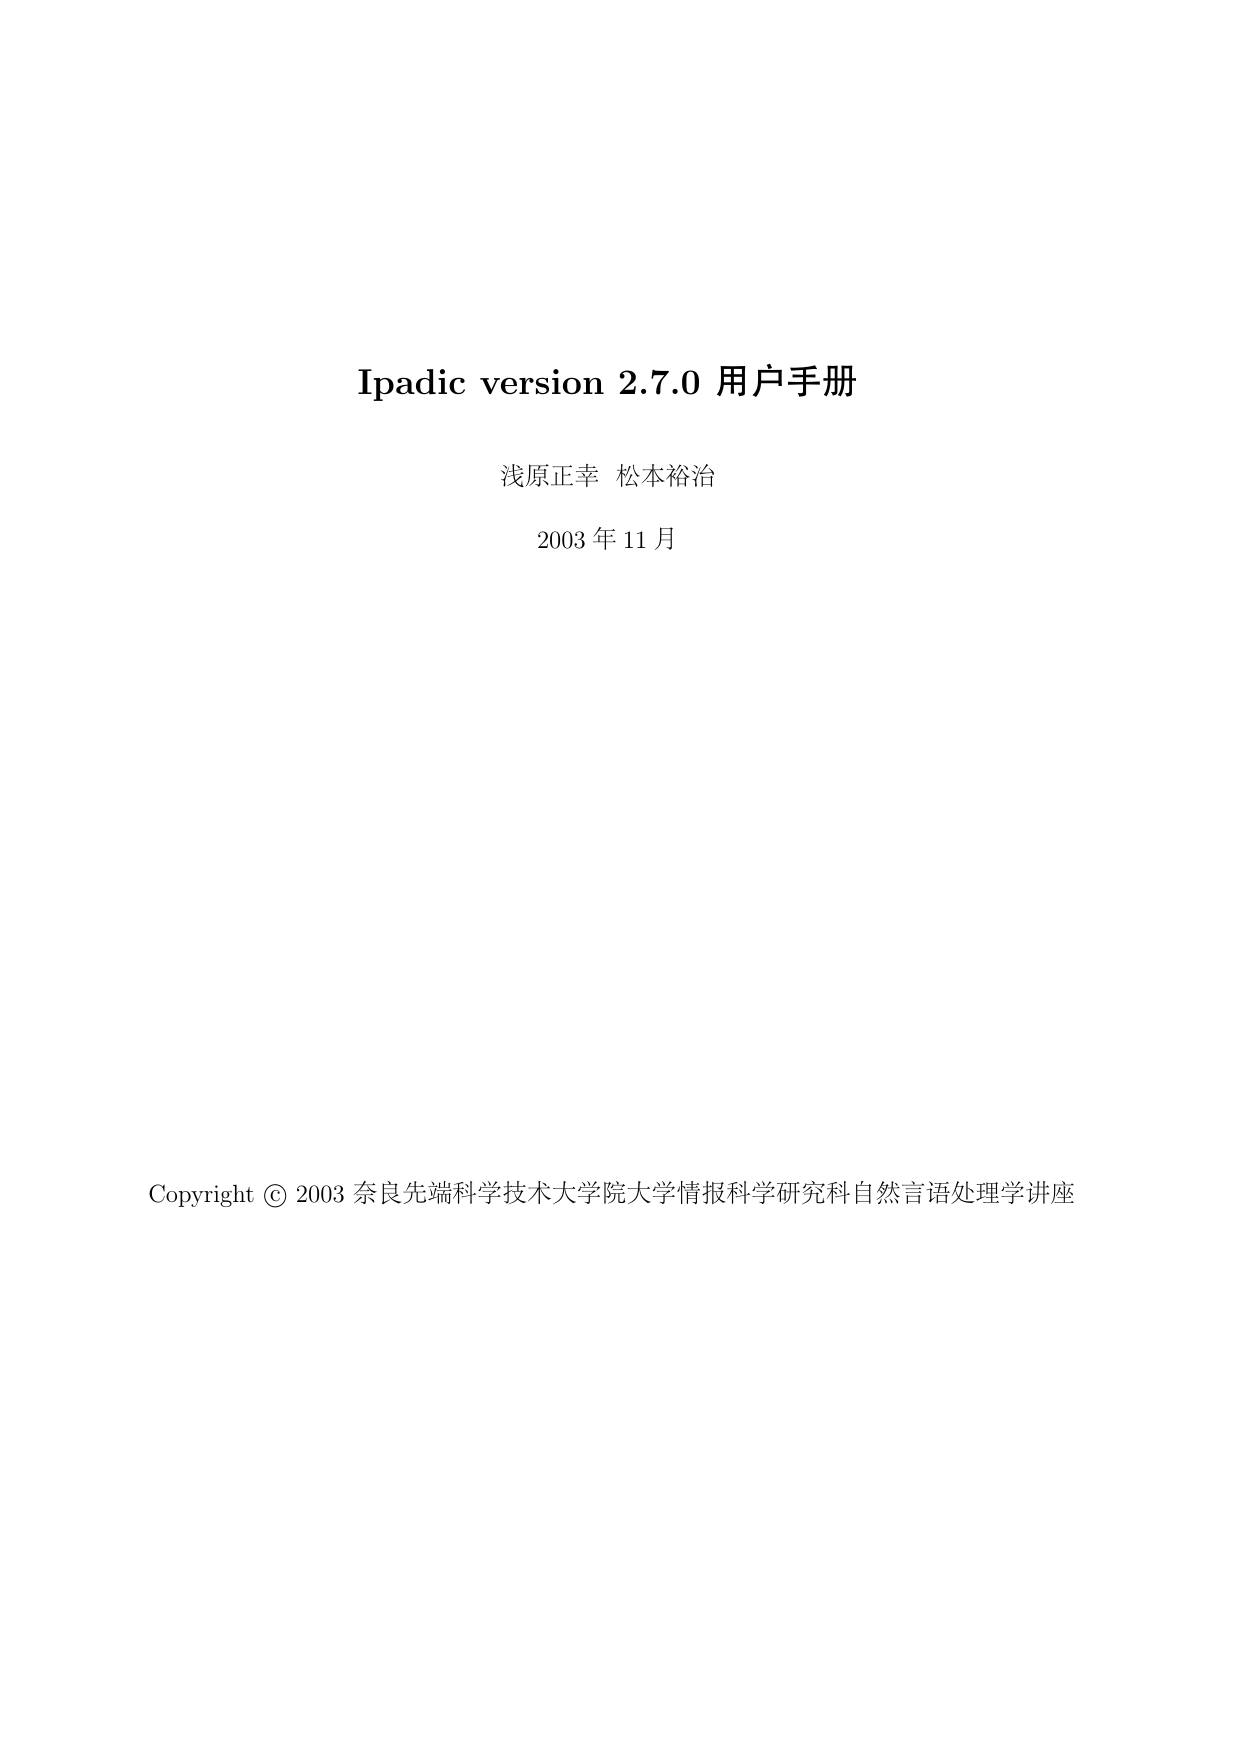 Ipadic Version 2 7 0 用户手册 Manualzz